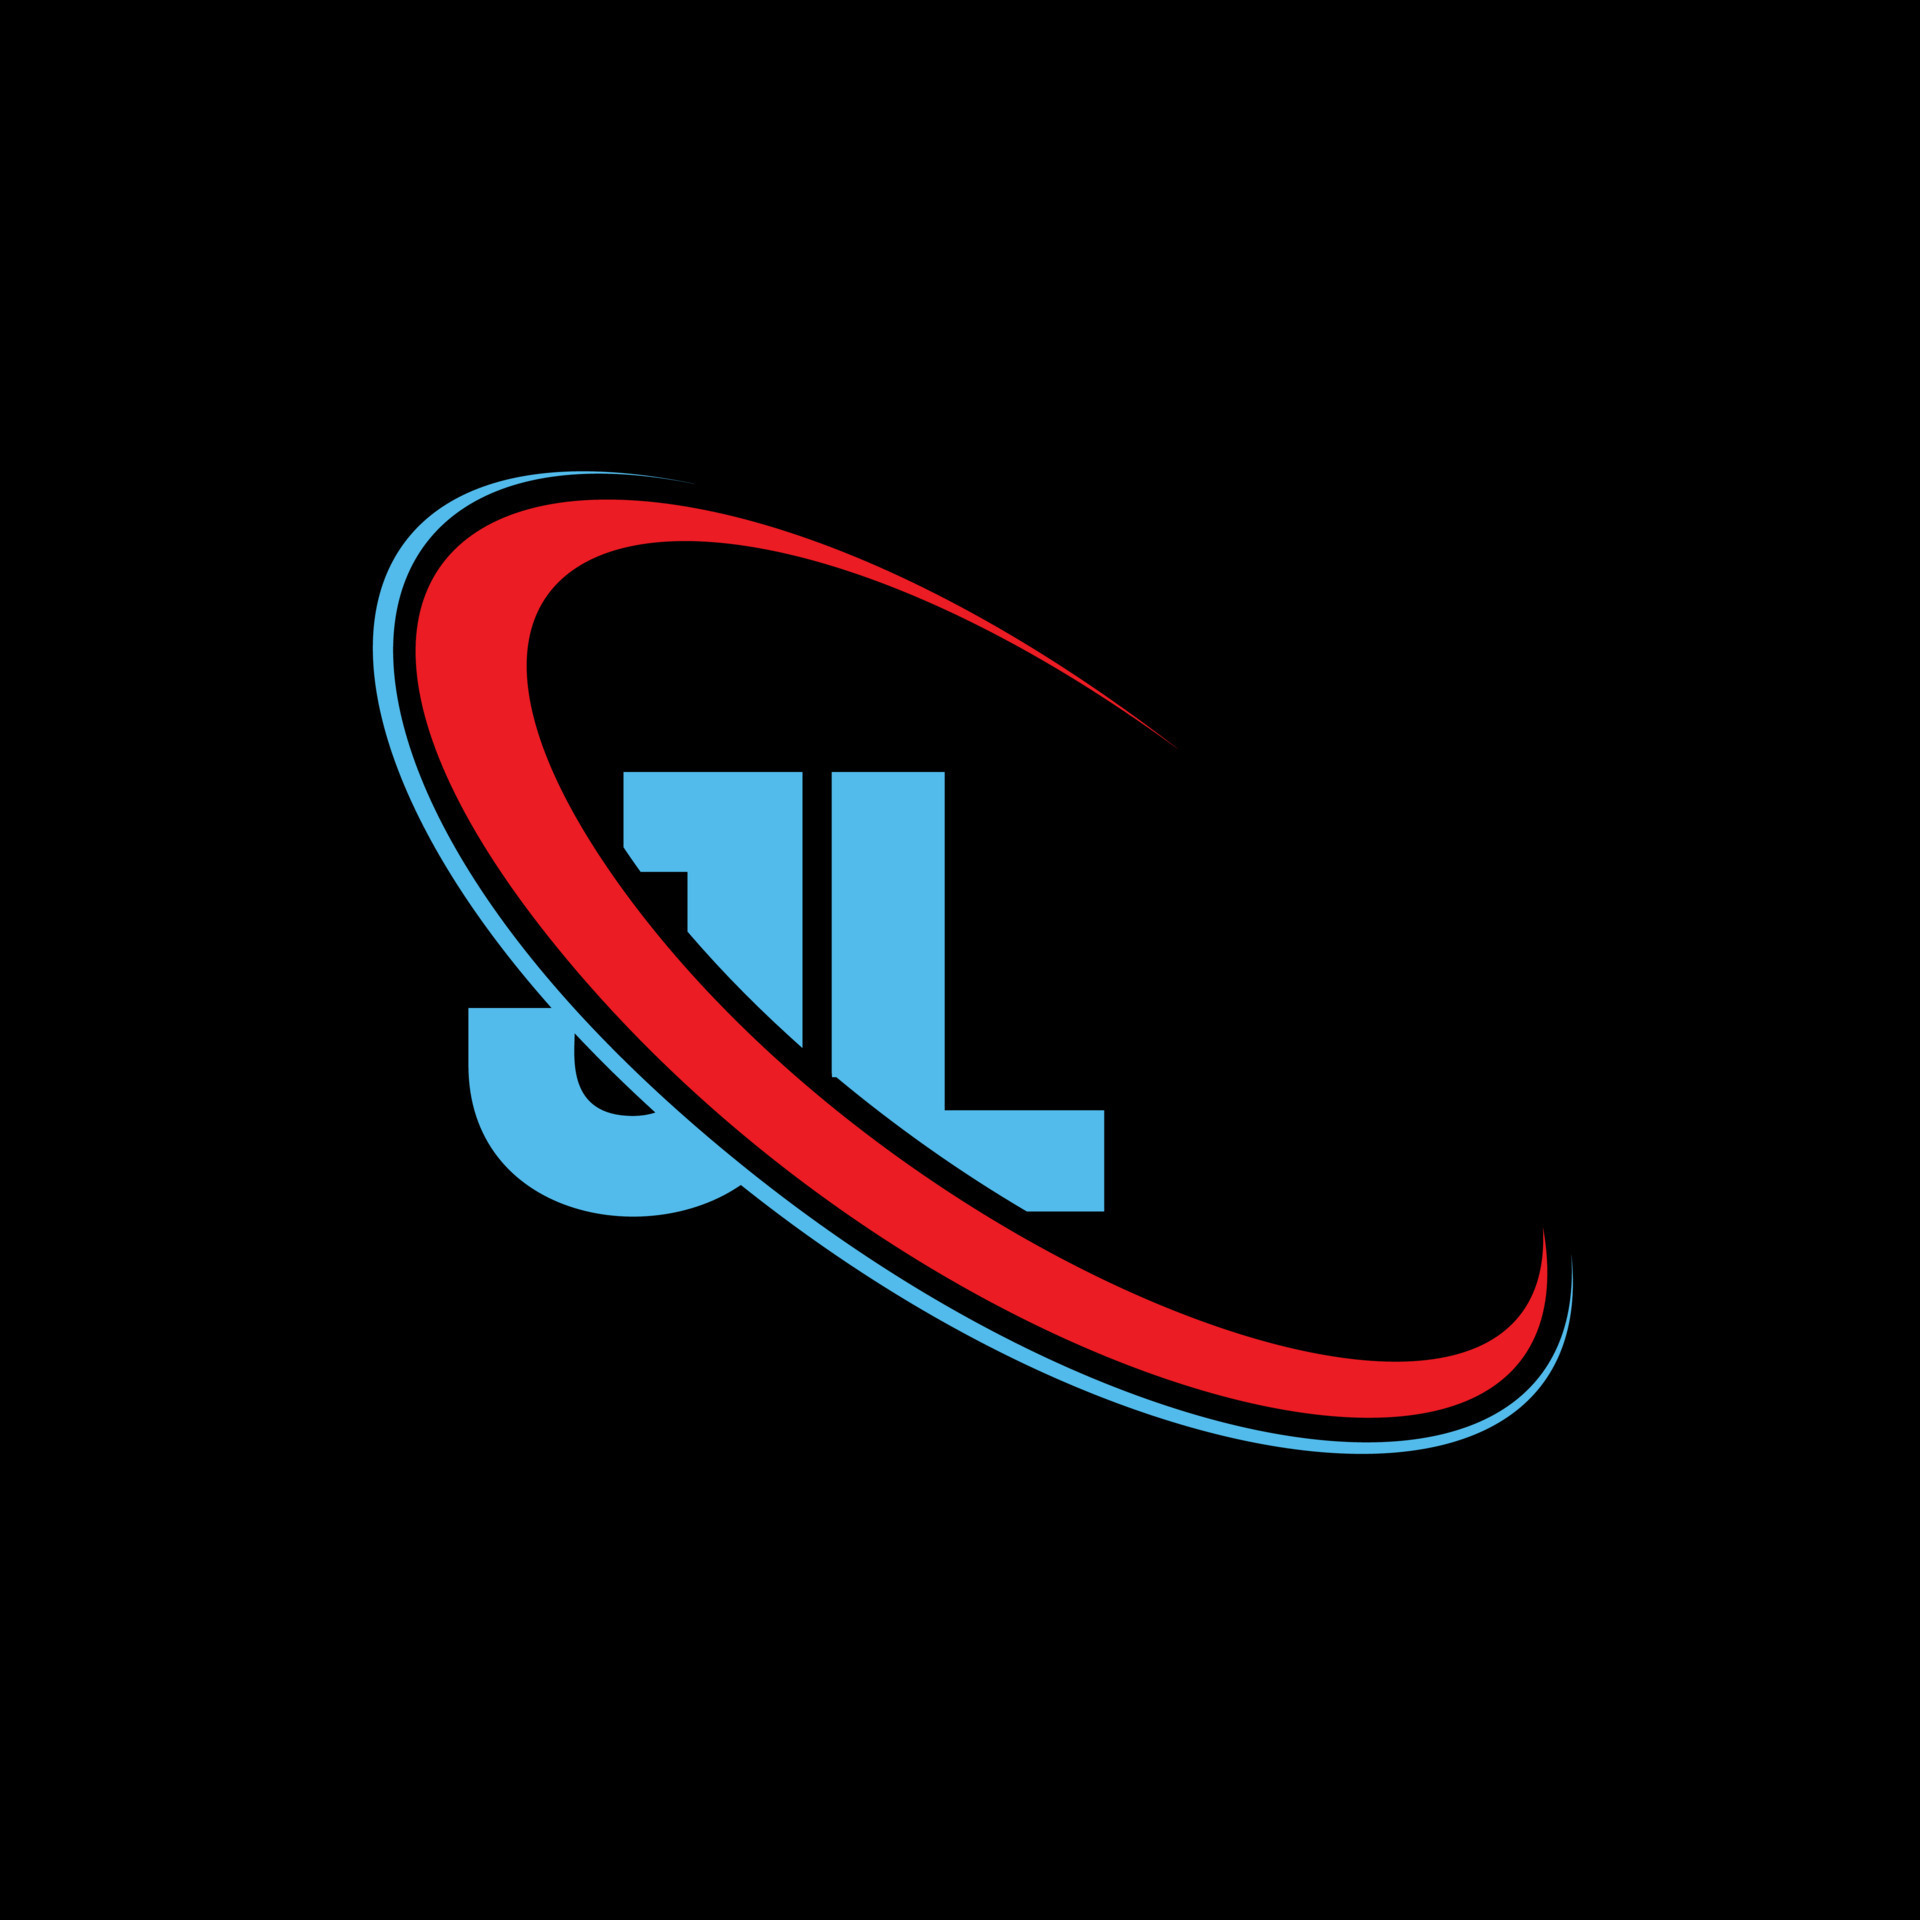 Free JL Logo Designs - DIY JL Logo Maker - Designmantic.com